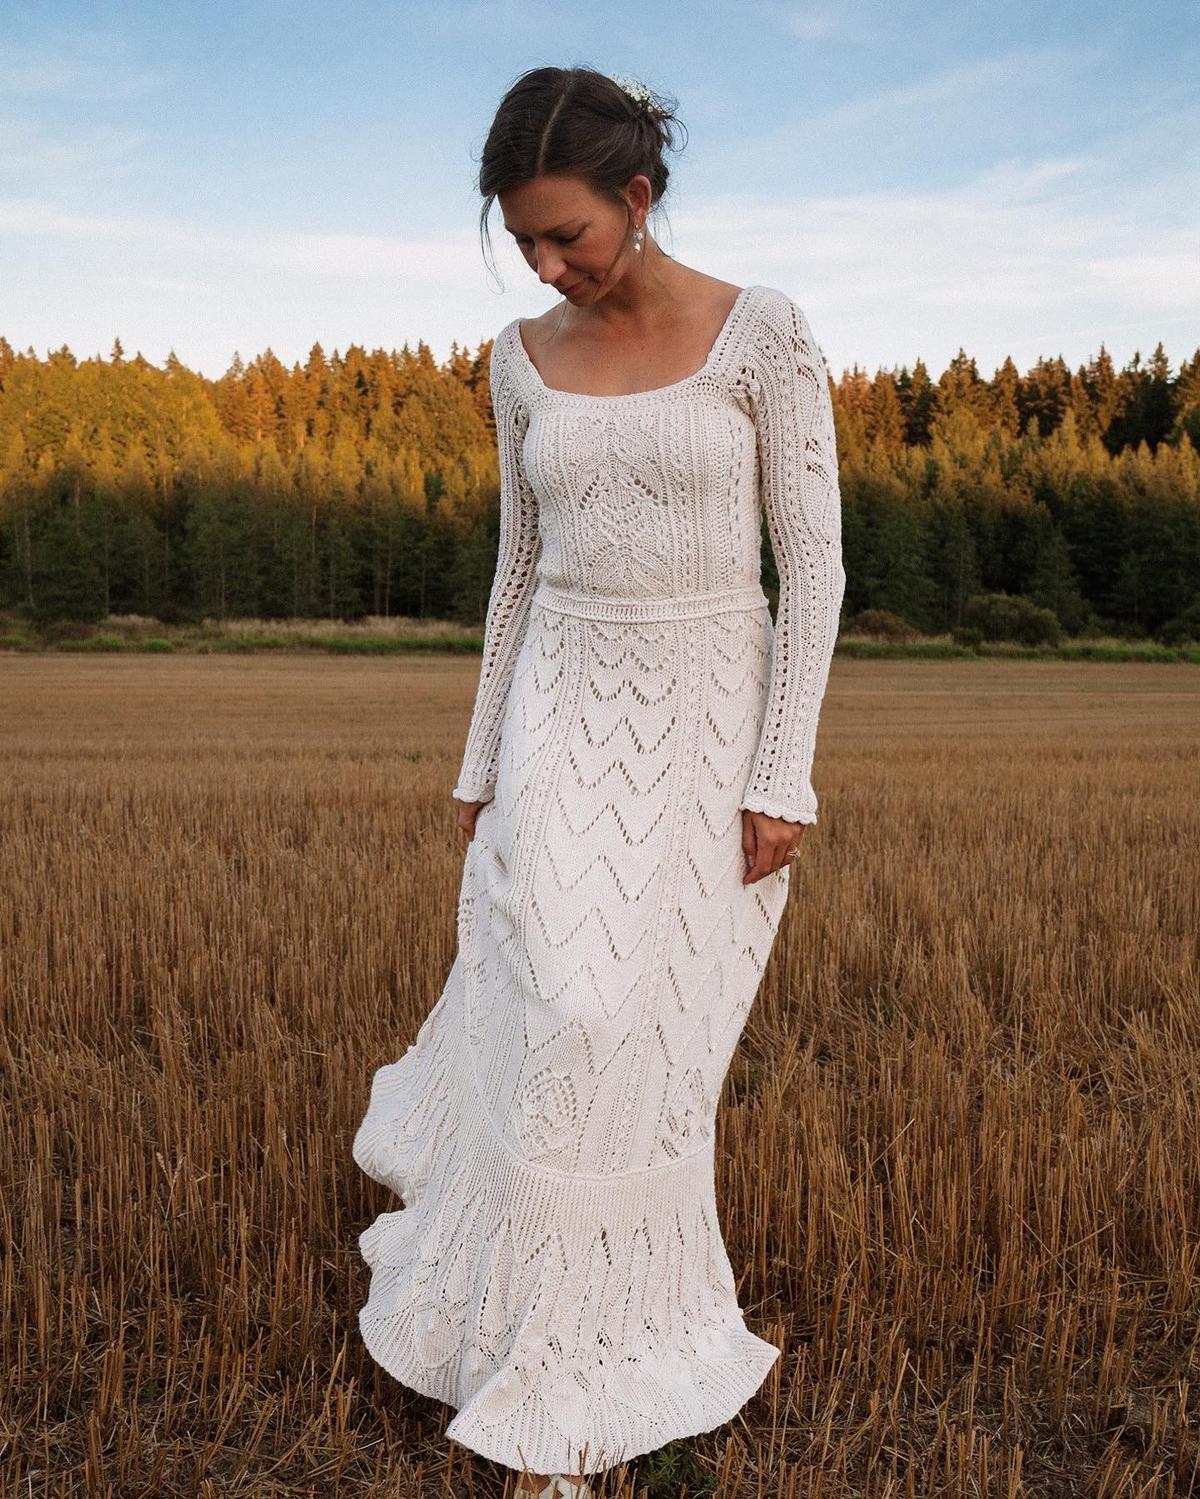 Veronika Lindberg wearing her knitted wedding dress. (Courtesy of Jukka Heino)